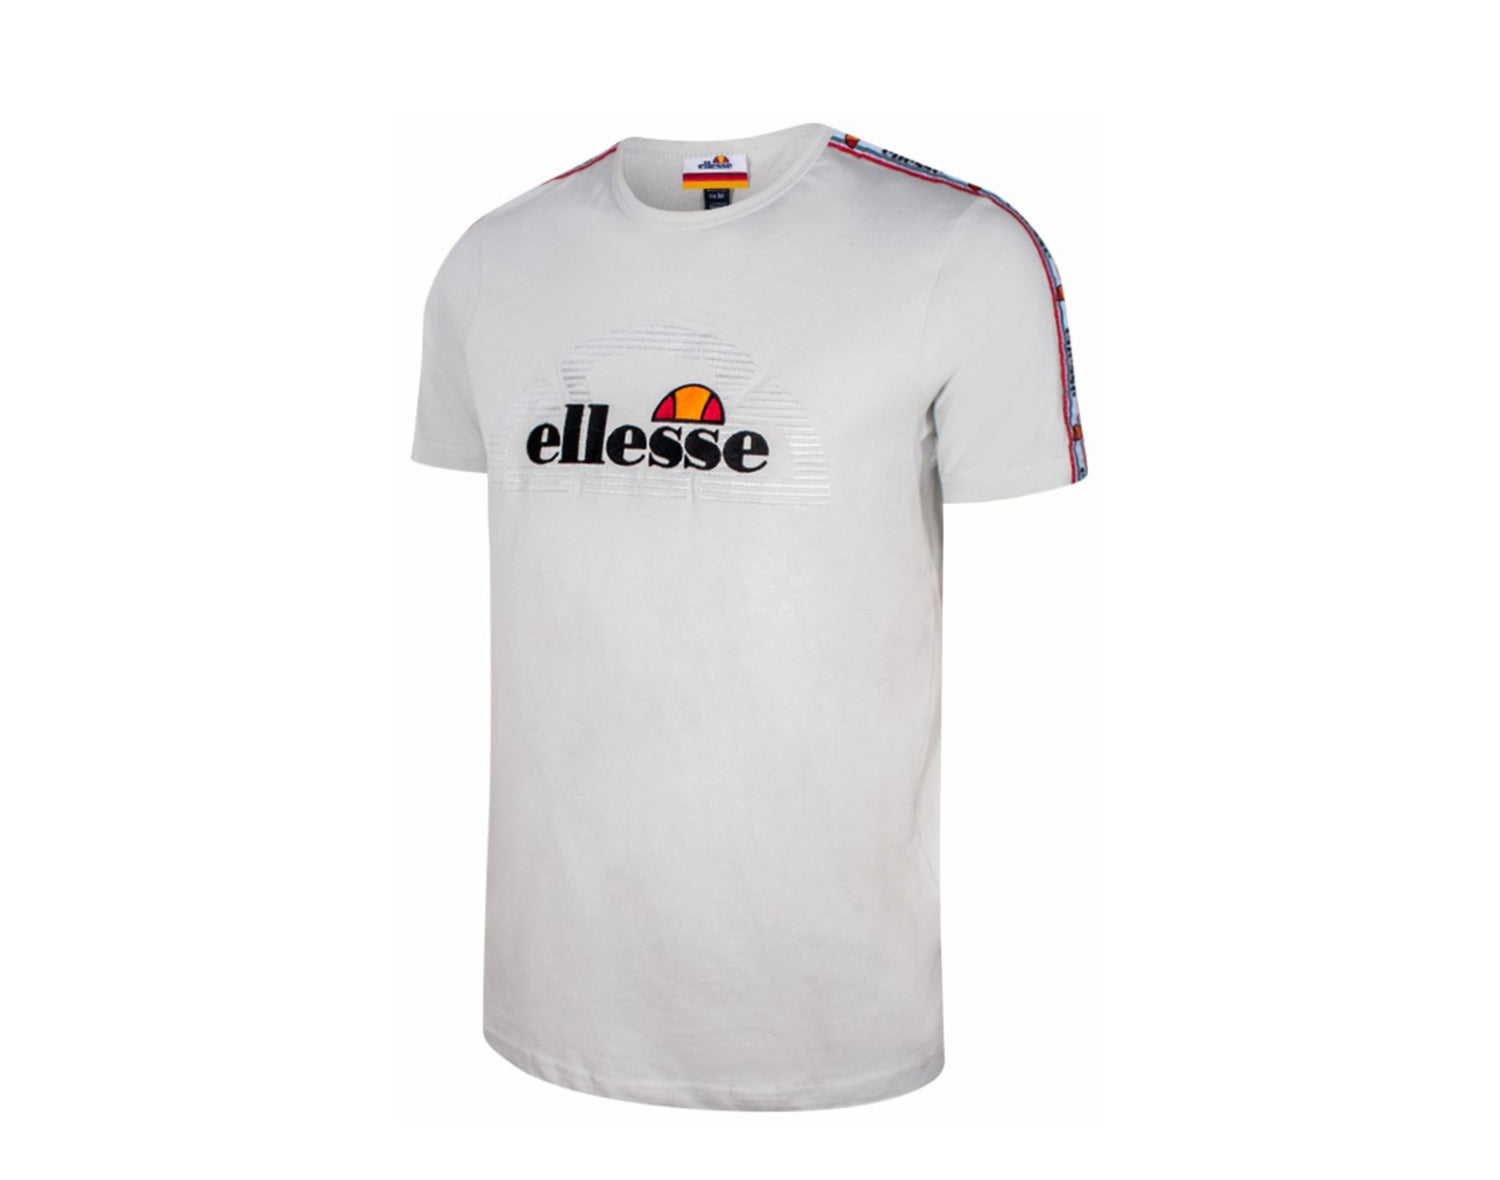 Ellesse Acapulco Men's T-Shirt